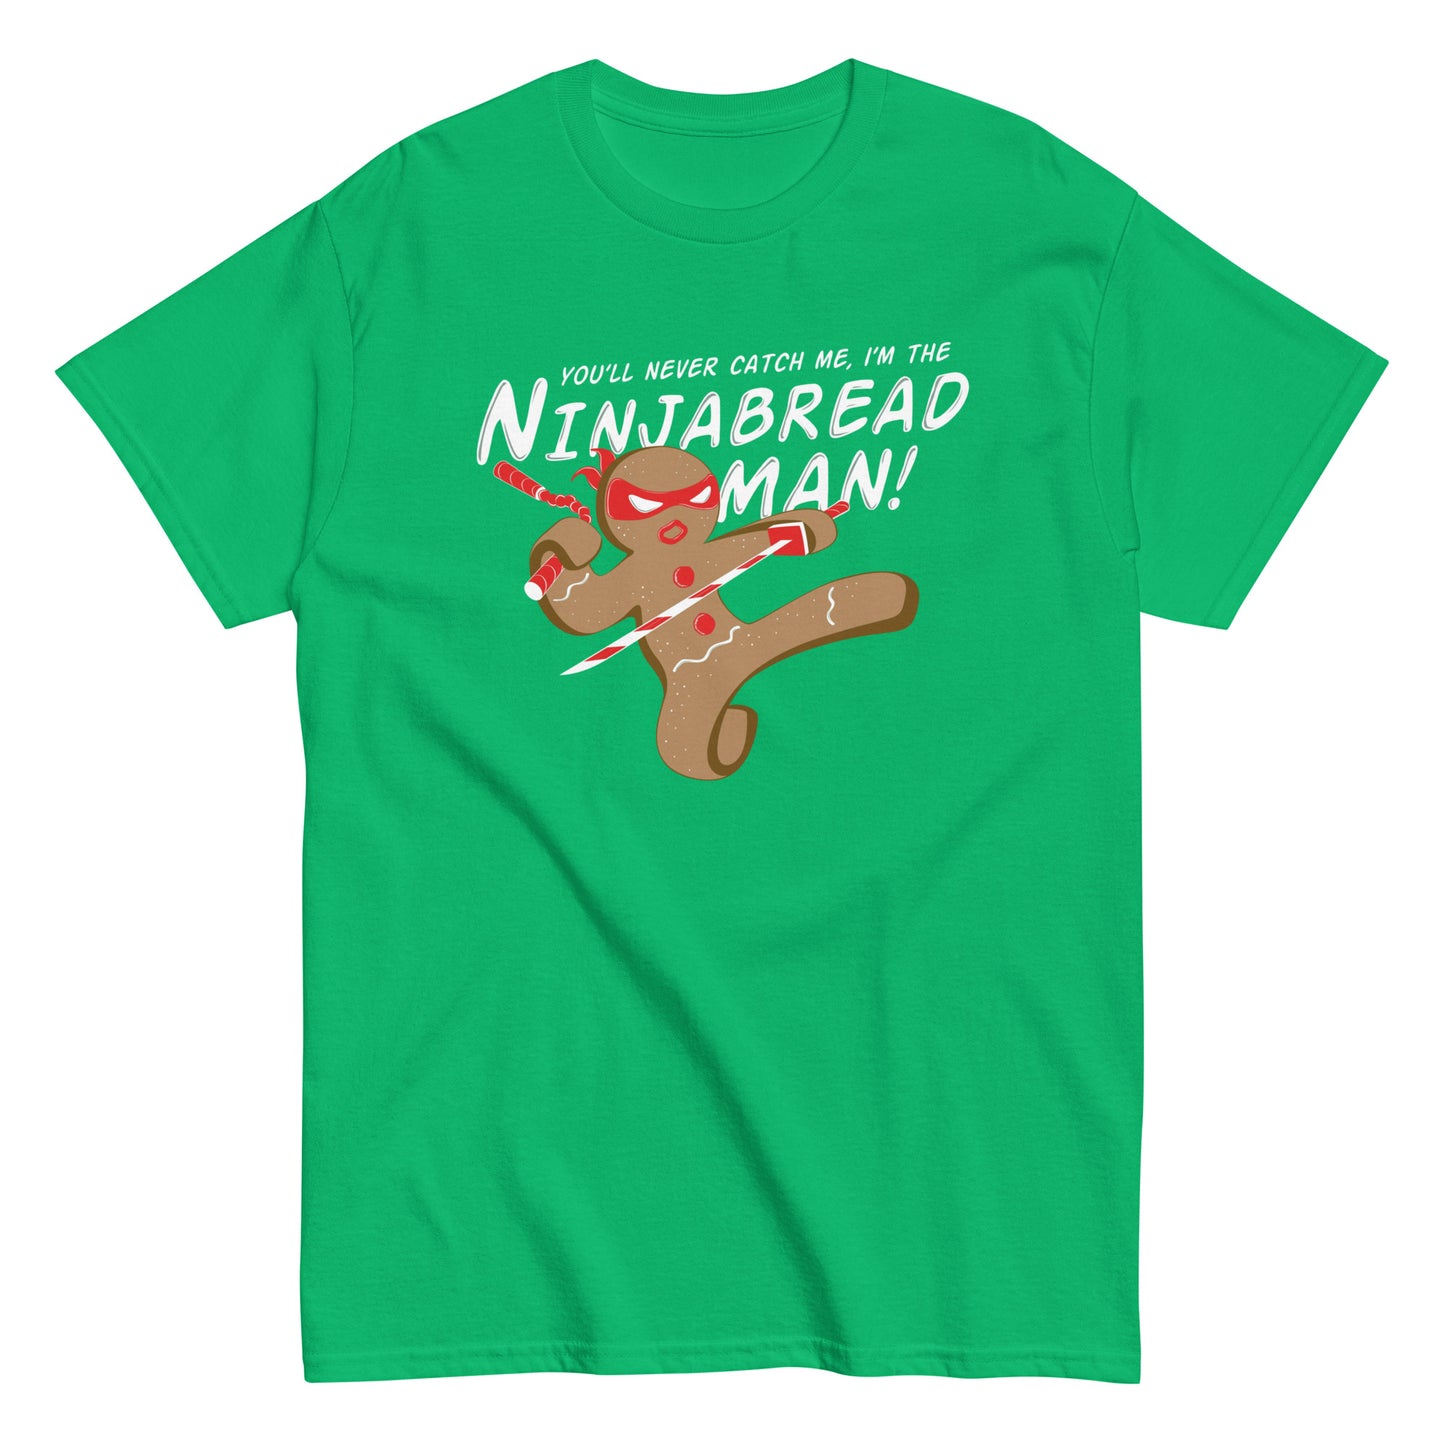 I'm The Ninjabread Man! Men's Classic Tee